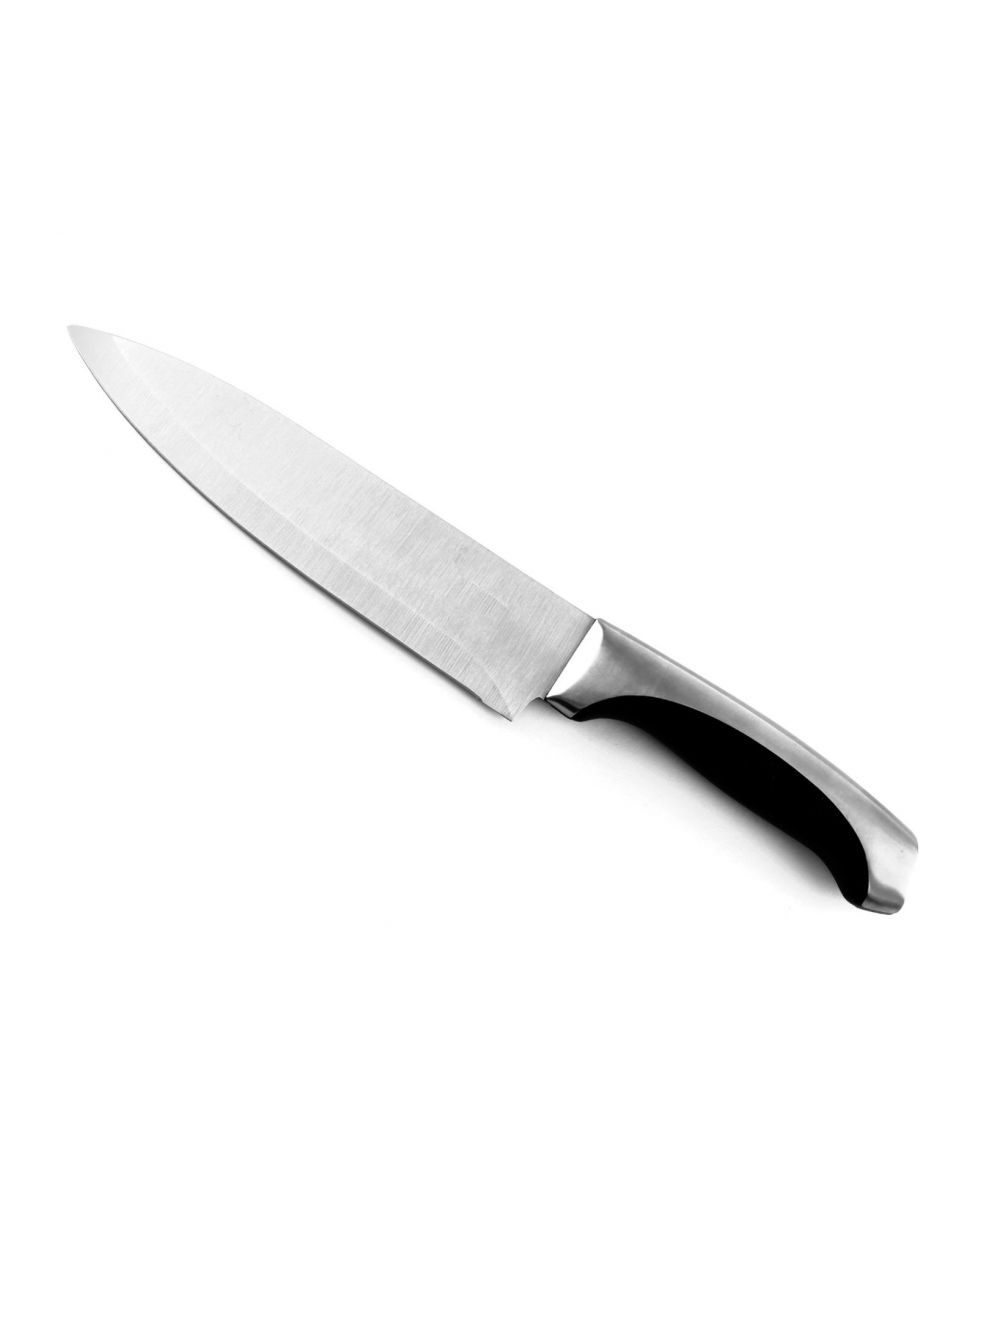 Royalford RF1801-CK Chefs Knife, 8 Inch